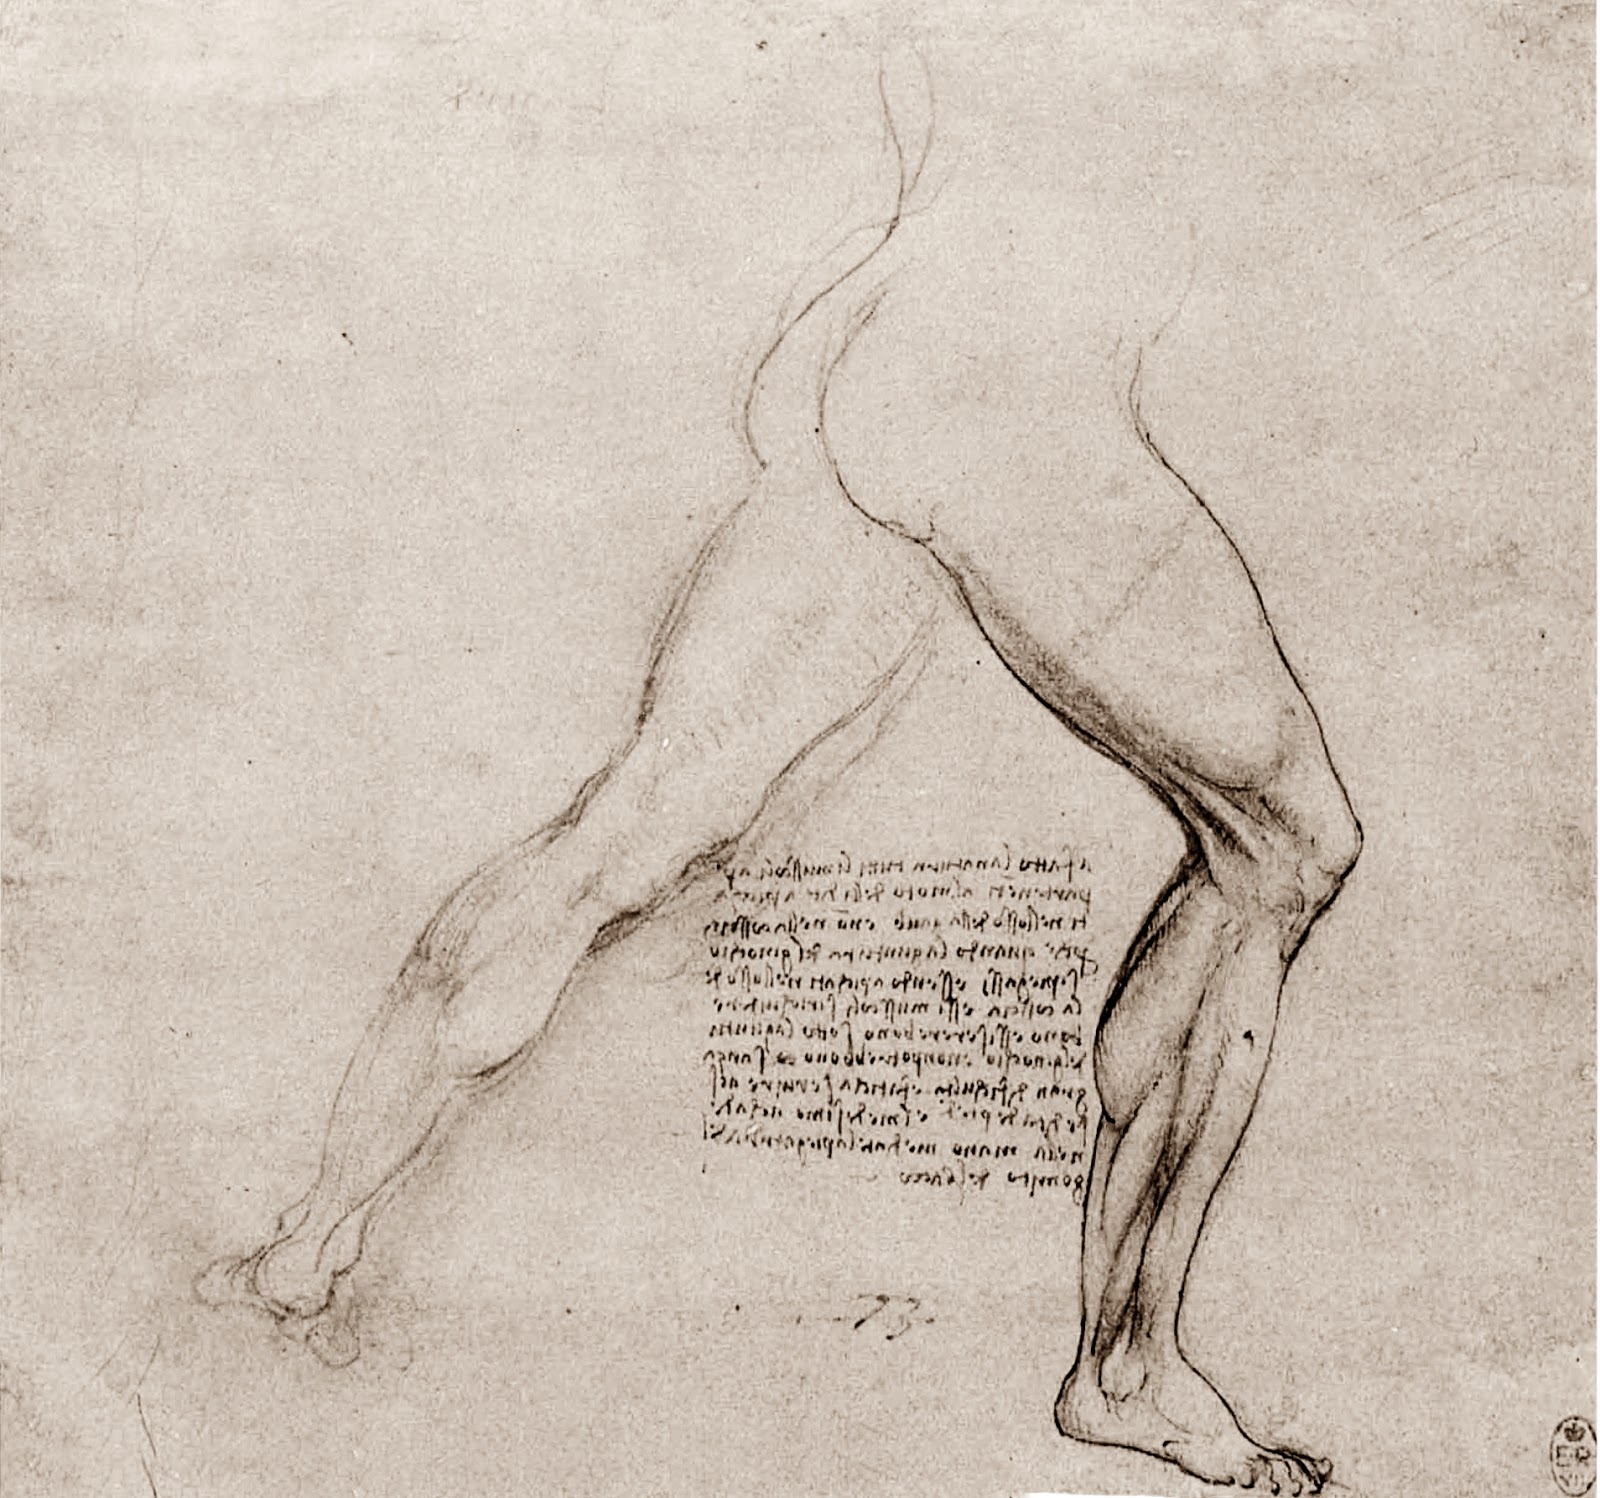 Leonardo+da+Vinci-1452-1519 (742).jpg